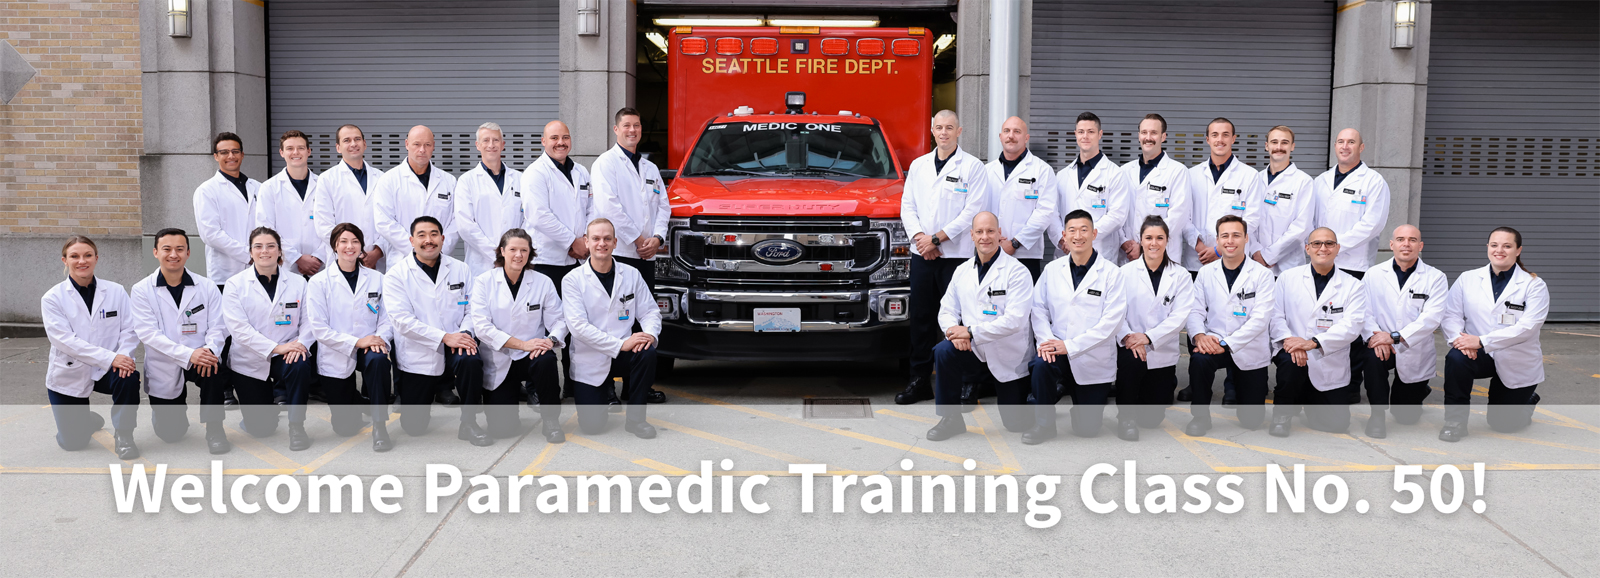 Paramedic Training Class #50